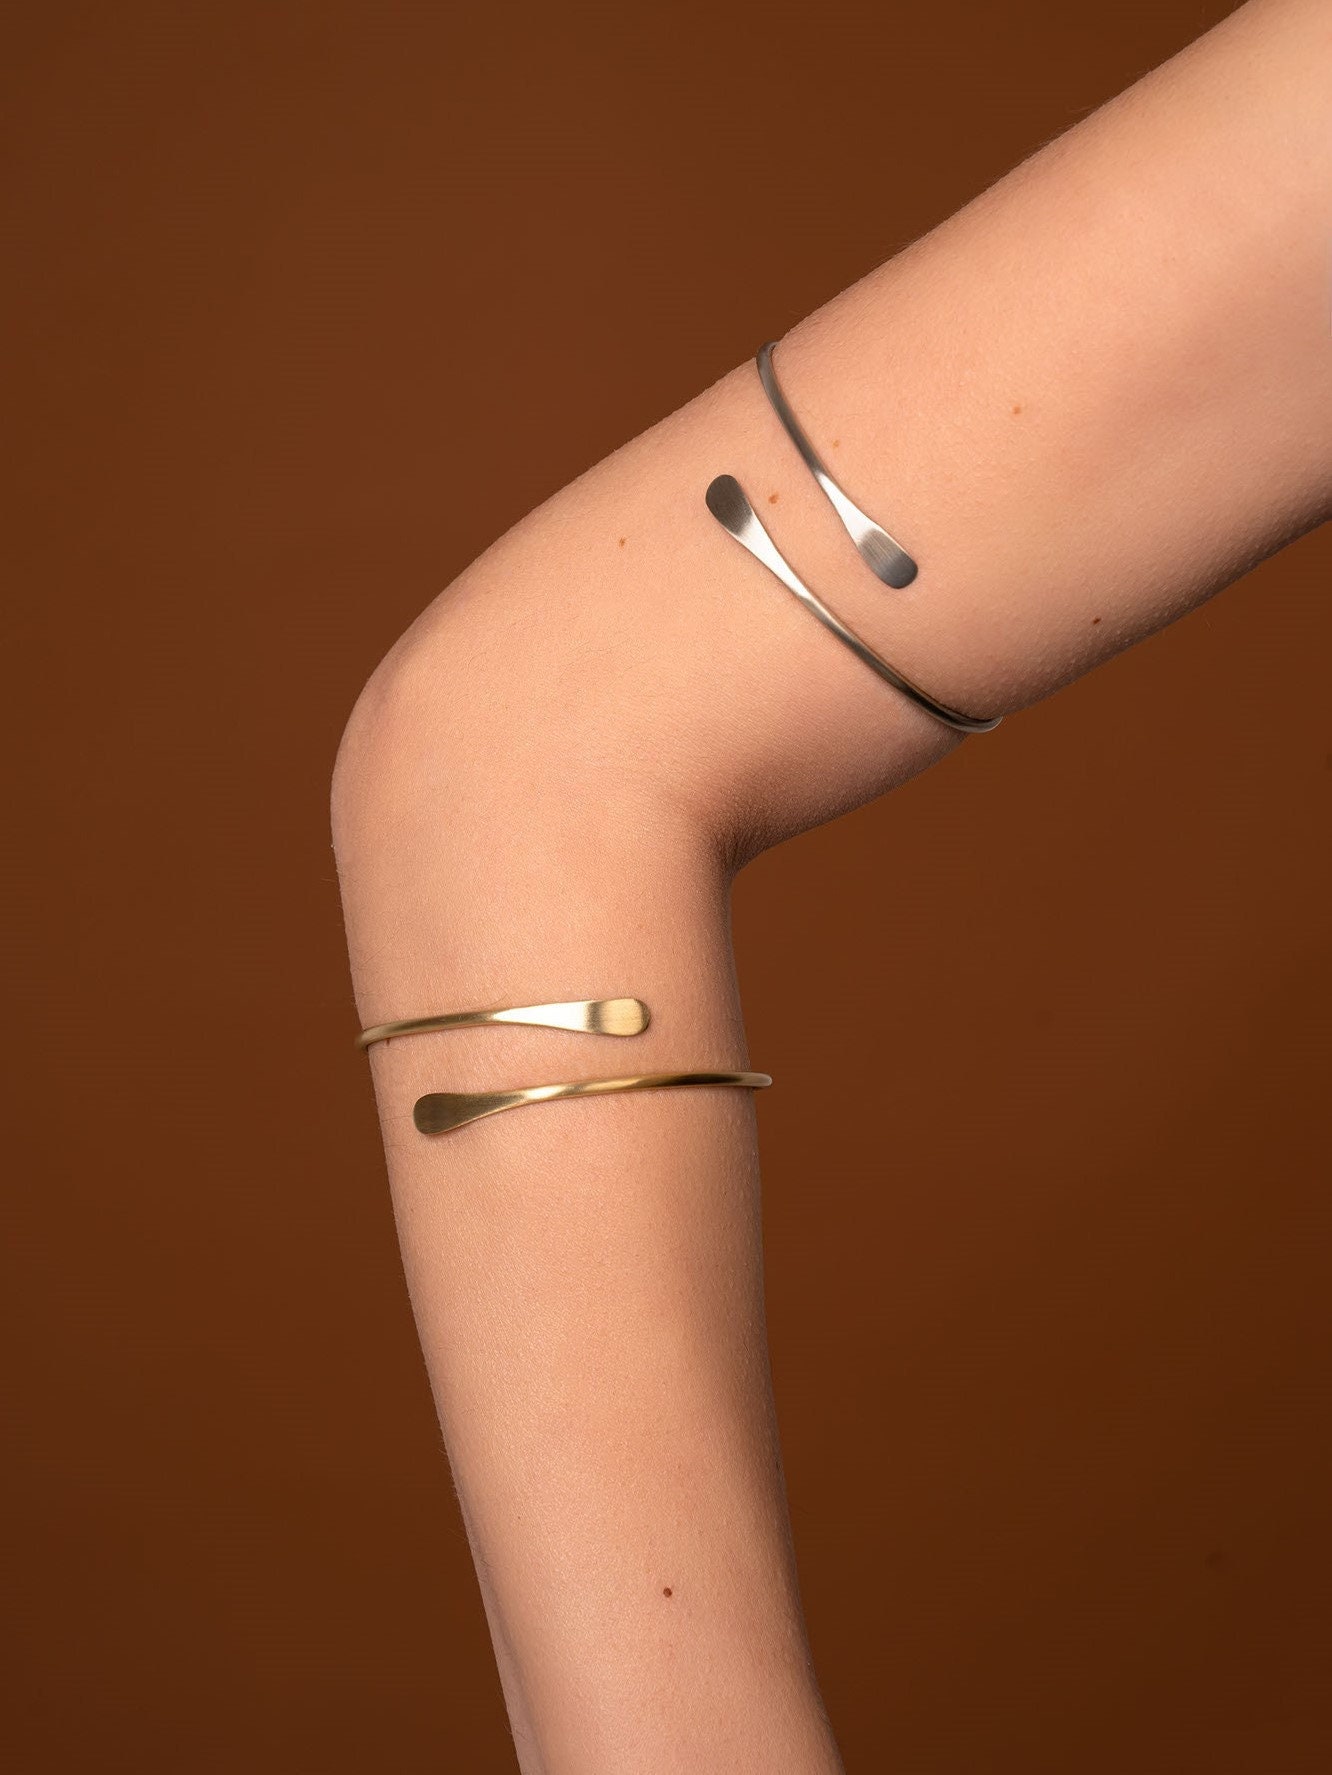 Upper Arm Gold Bracelet - Fashion Cuff Bracelet - Gift for her - Nadin Art  Design - Personalized Jewelry